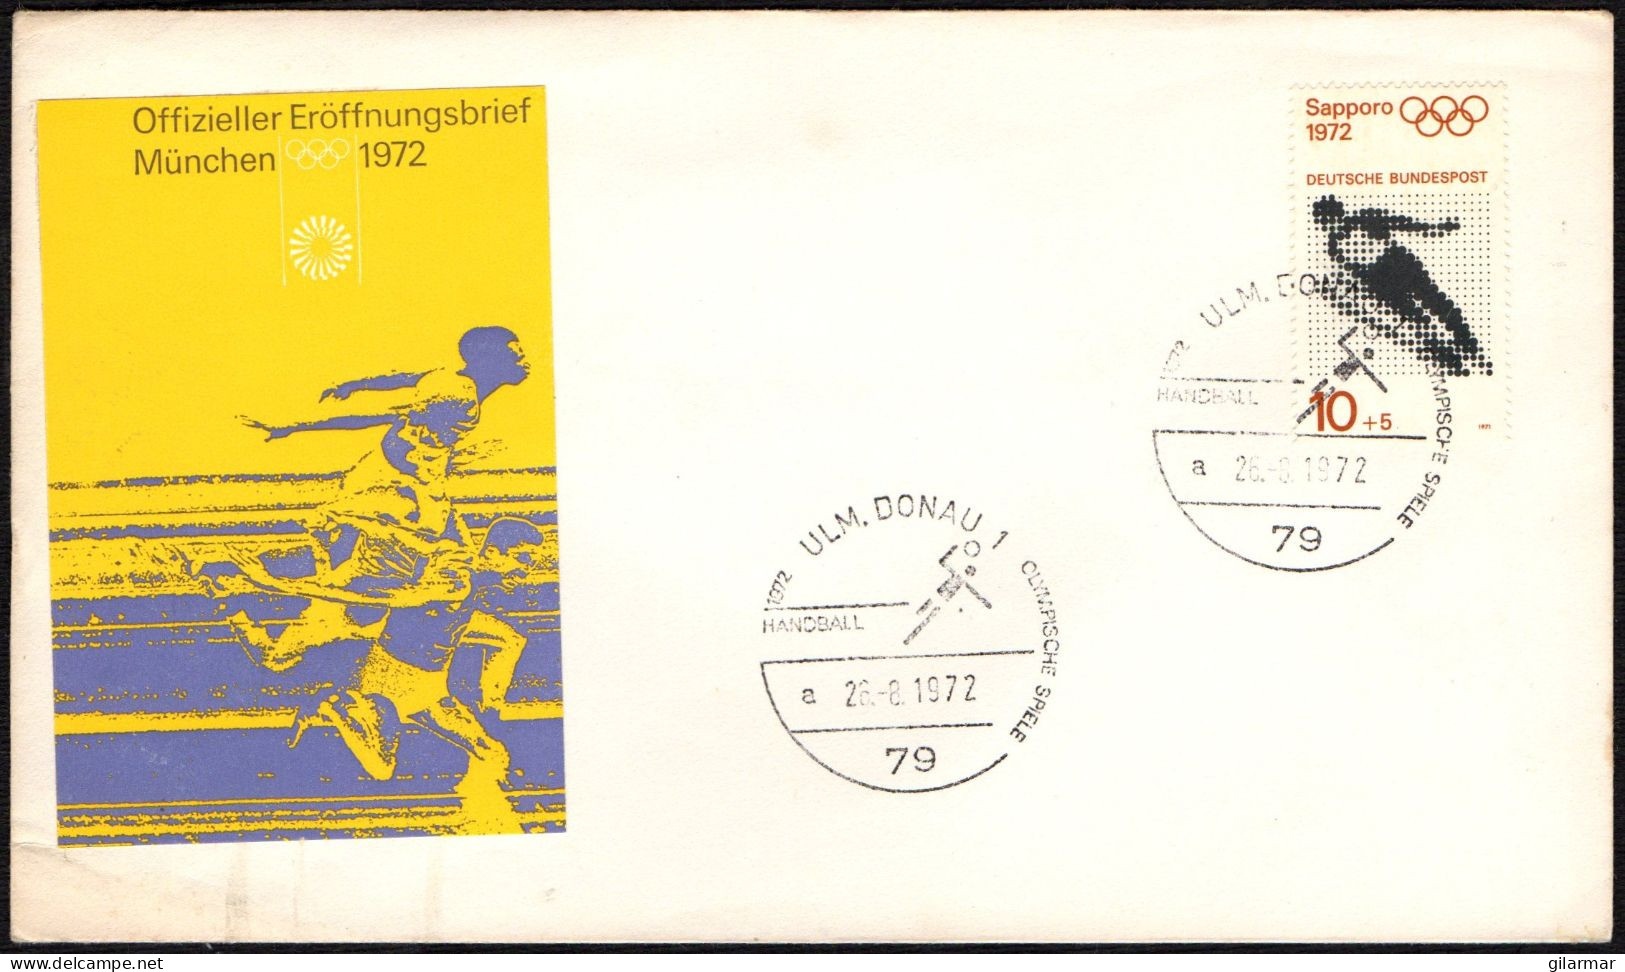 PALLAMANO - GERMANY ULM DONAU 1972 - OLYMPIC GAMES MUNICH 1972 - HANDBALL - M - Hand-Ball